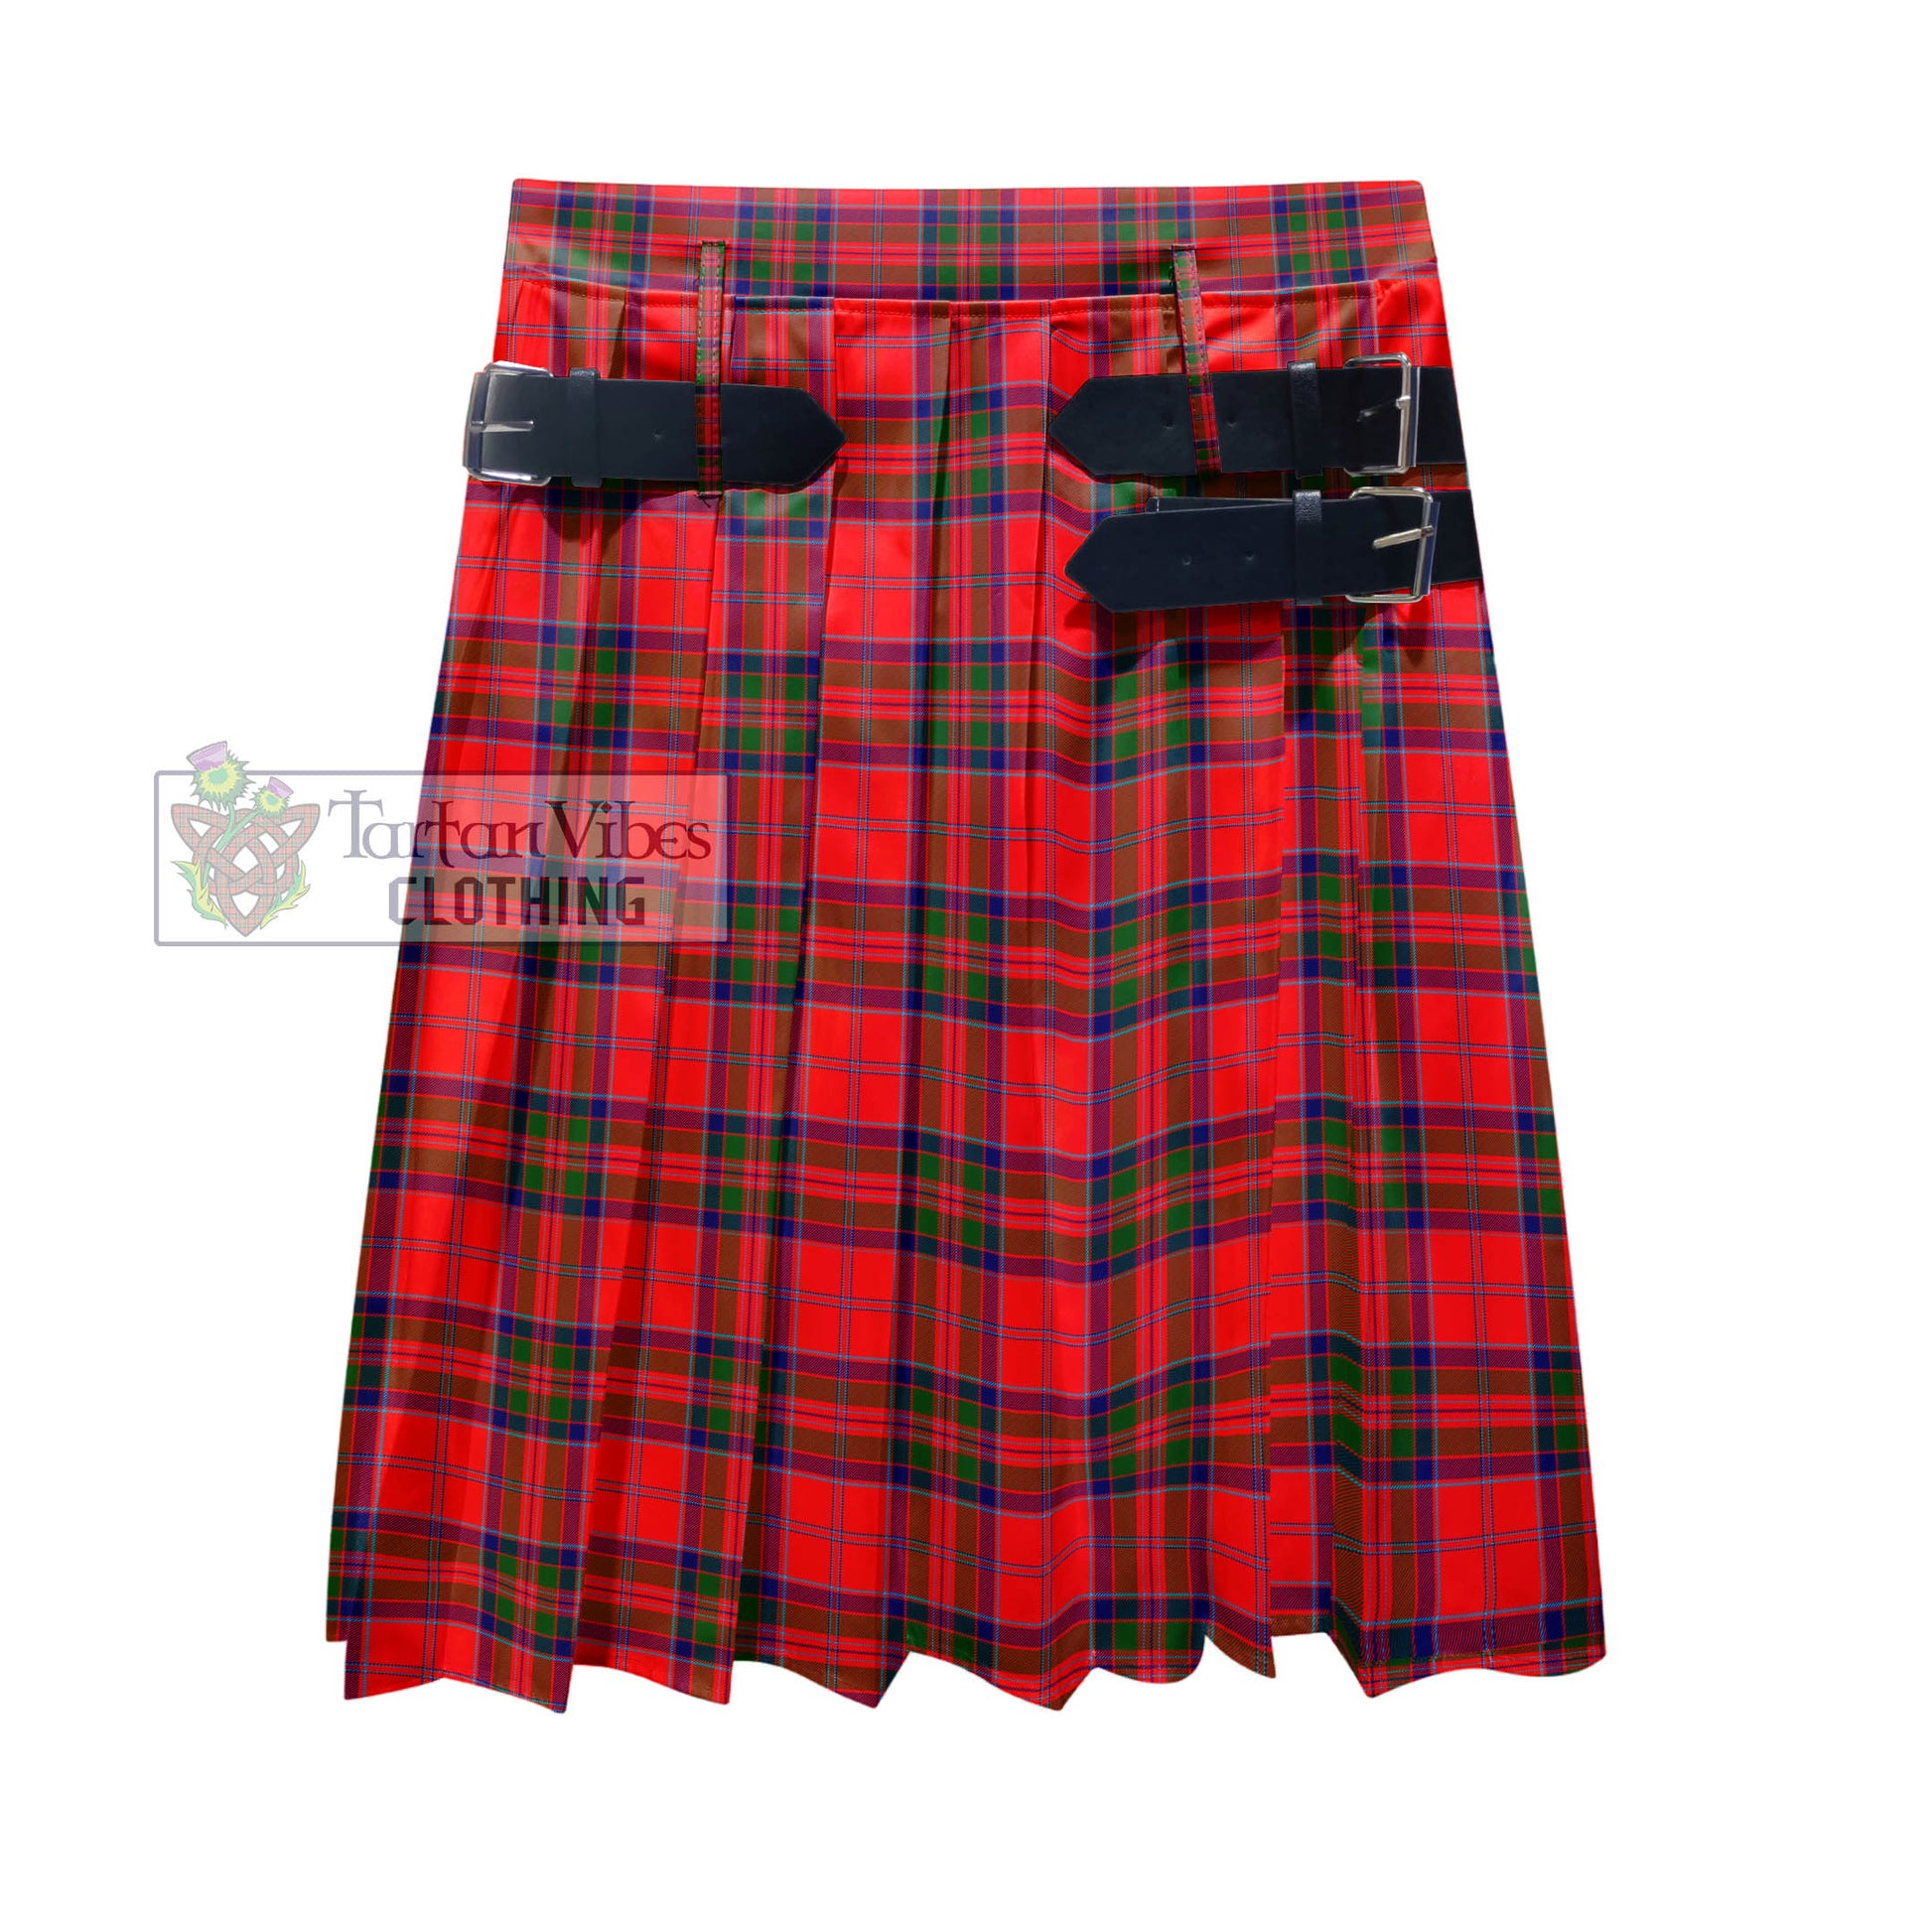 Tartan Vibes Clothing MacGillivray Modern Tartan Men's Pleated Skirt - Fashion Casual Retro Scottish Style